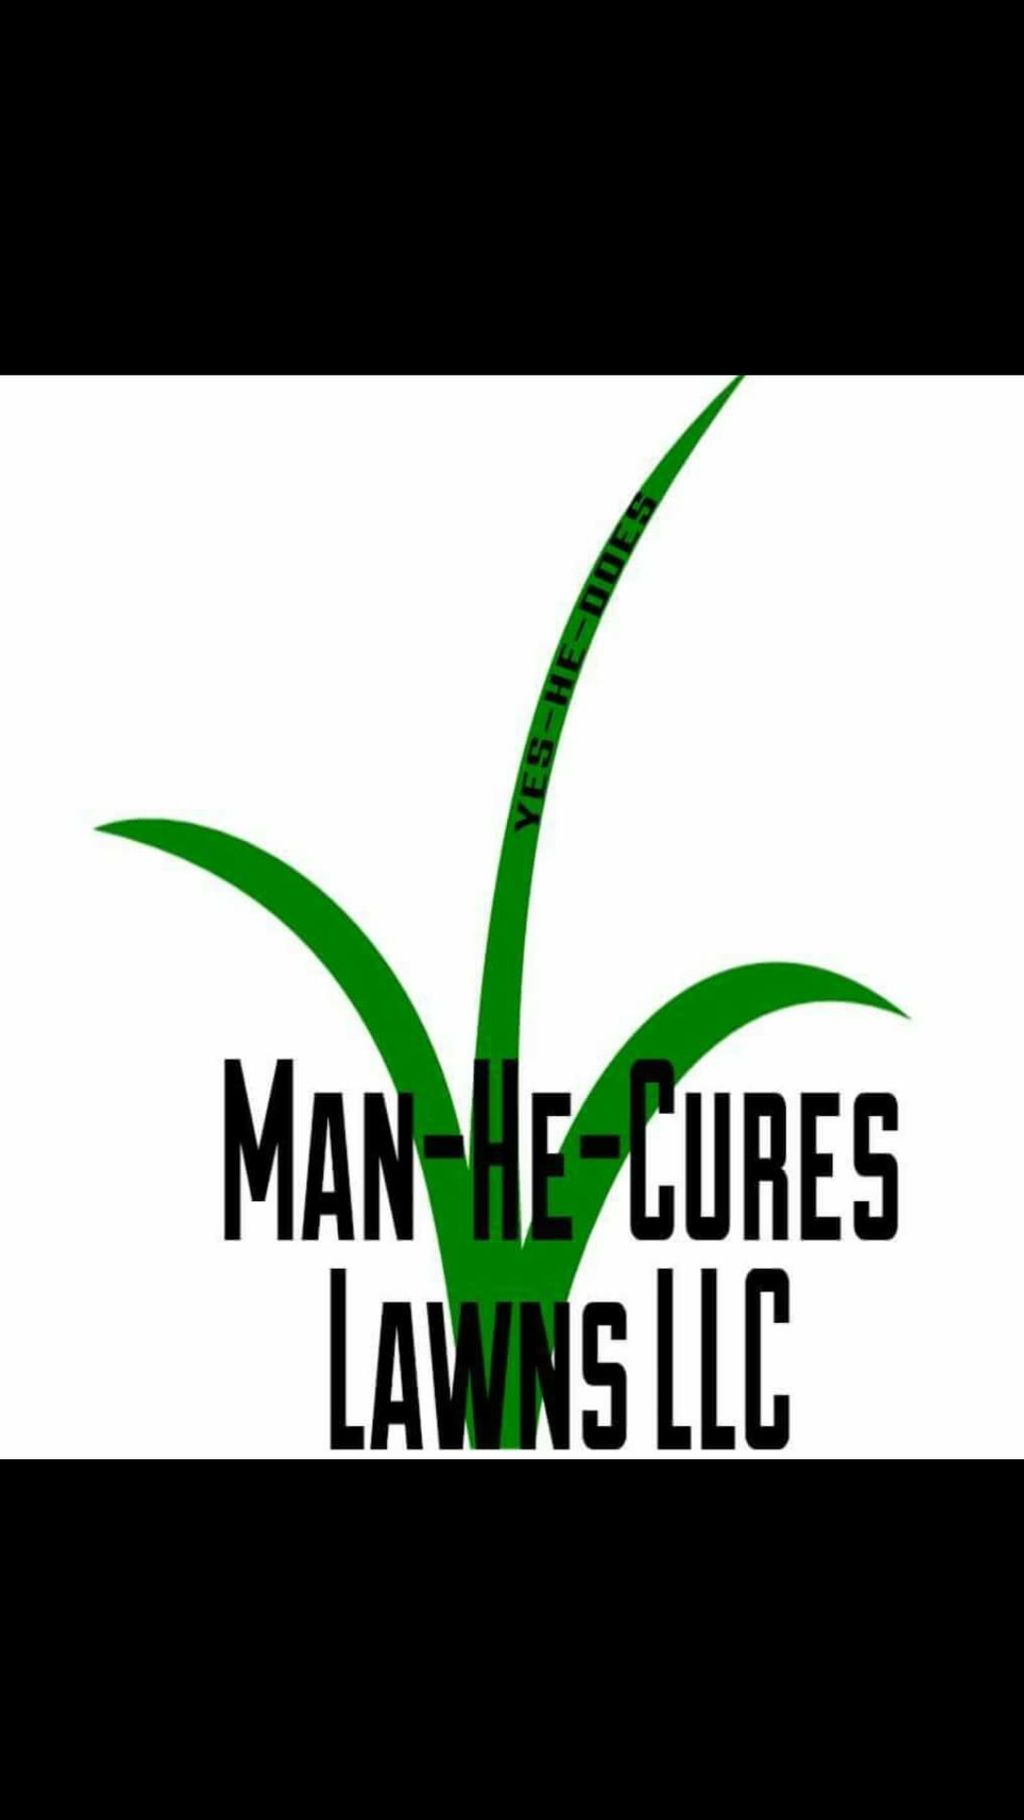 Man-He-Cures Lawns LLC